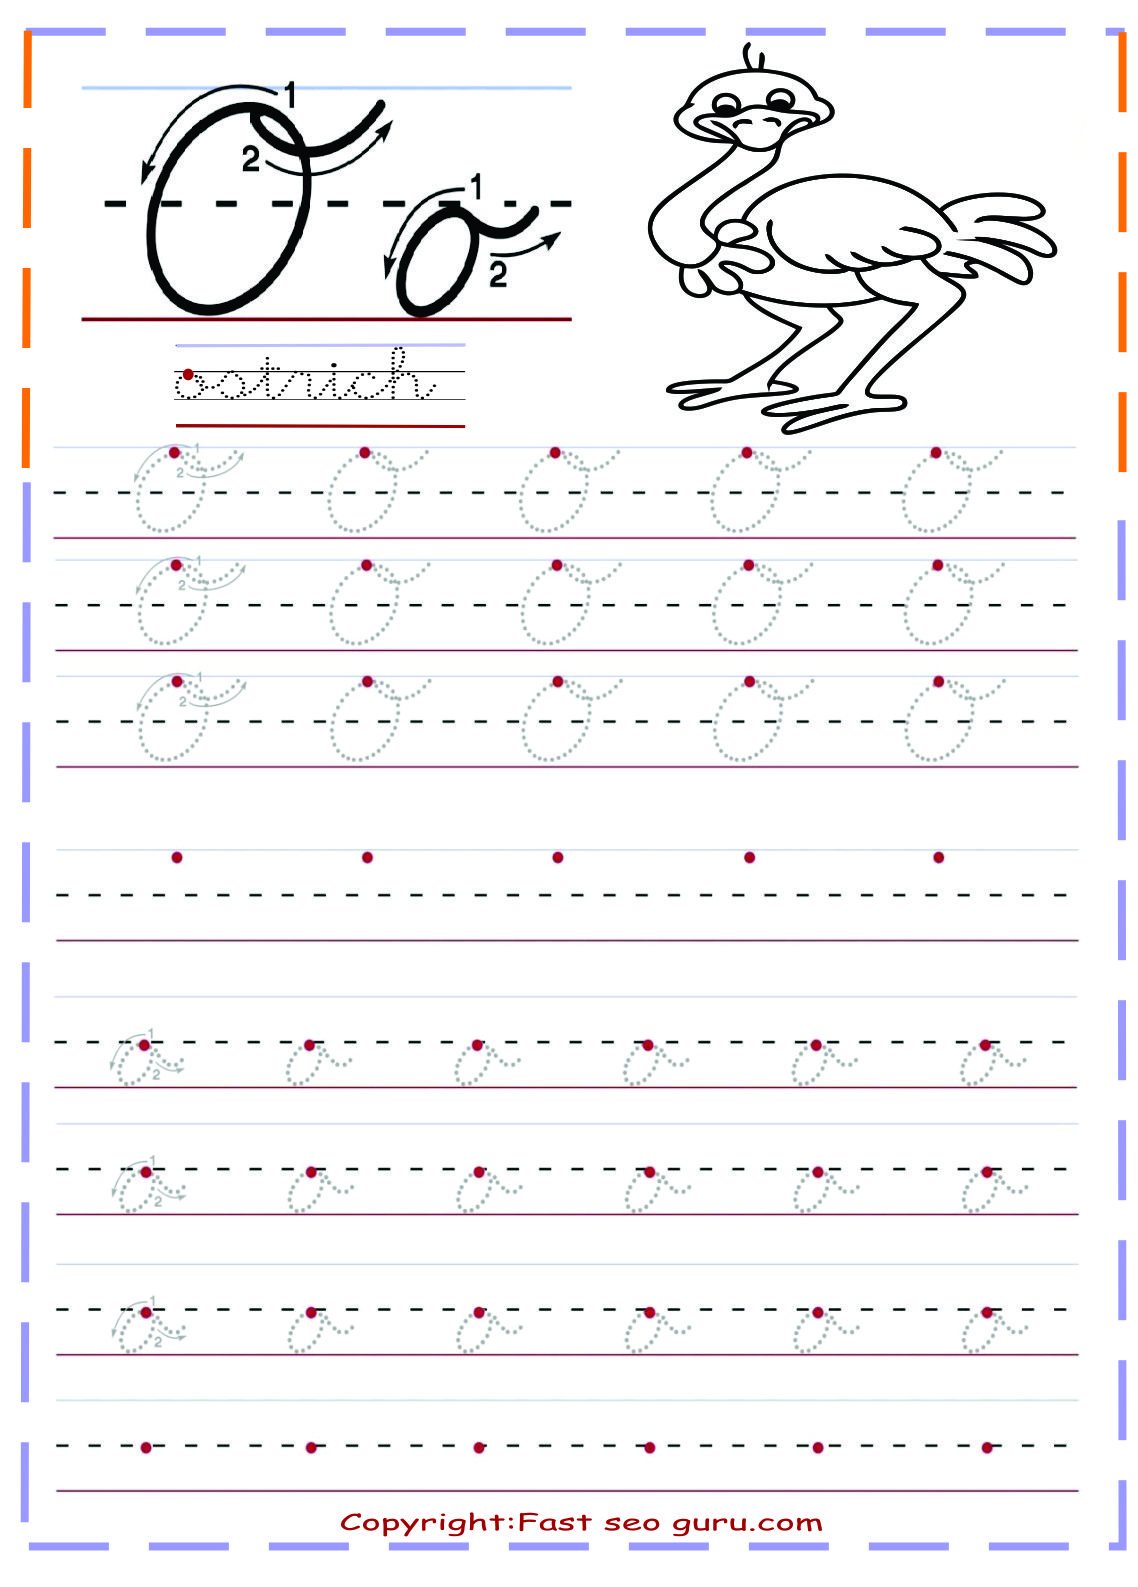 Cursive Handwriting Tracing Worksheets Letter O For Ostrich inside Letter Tracing Worksheets Cursive